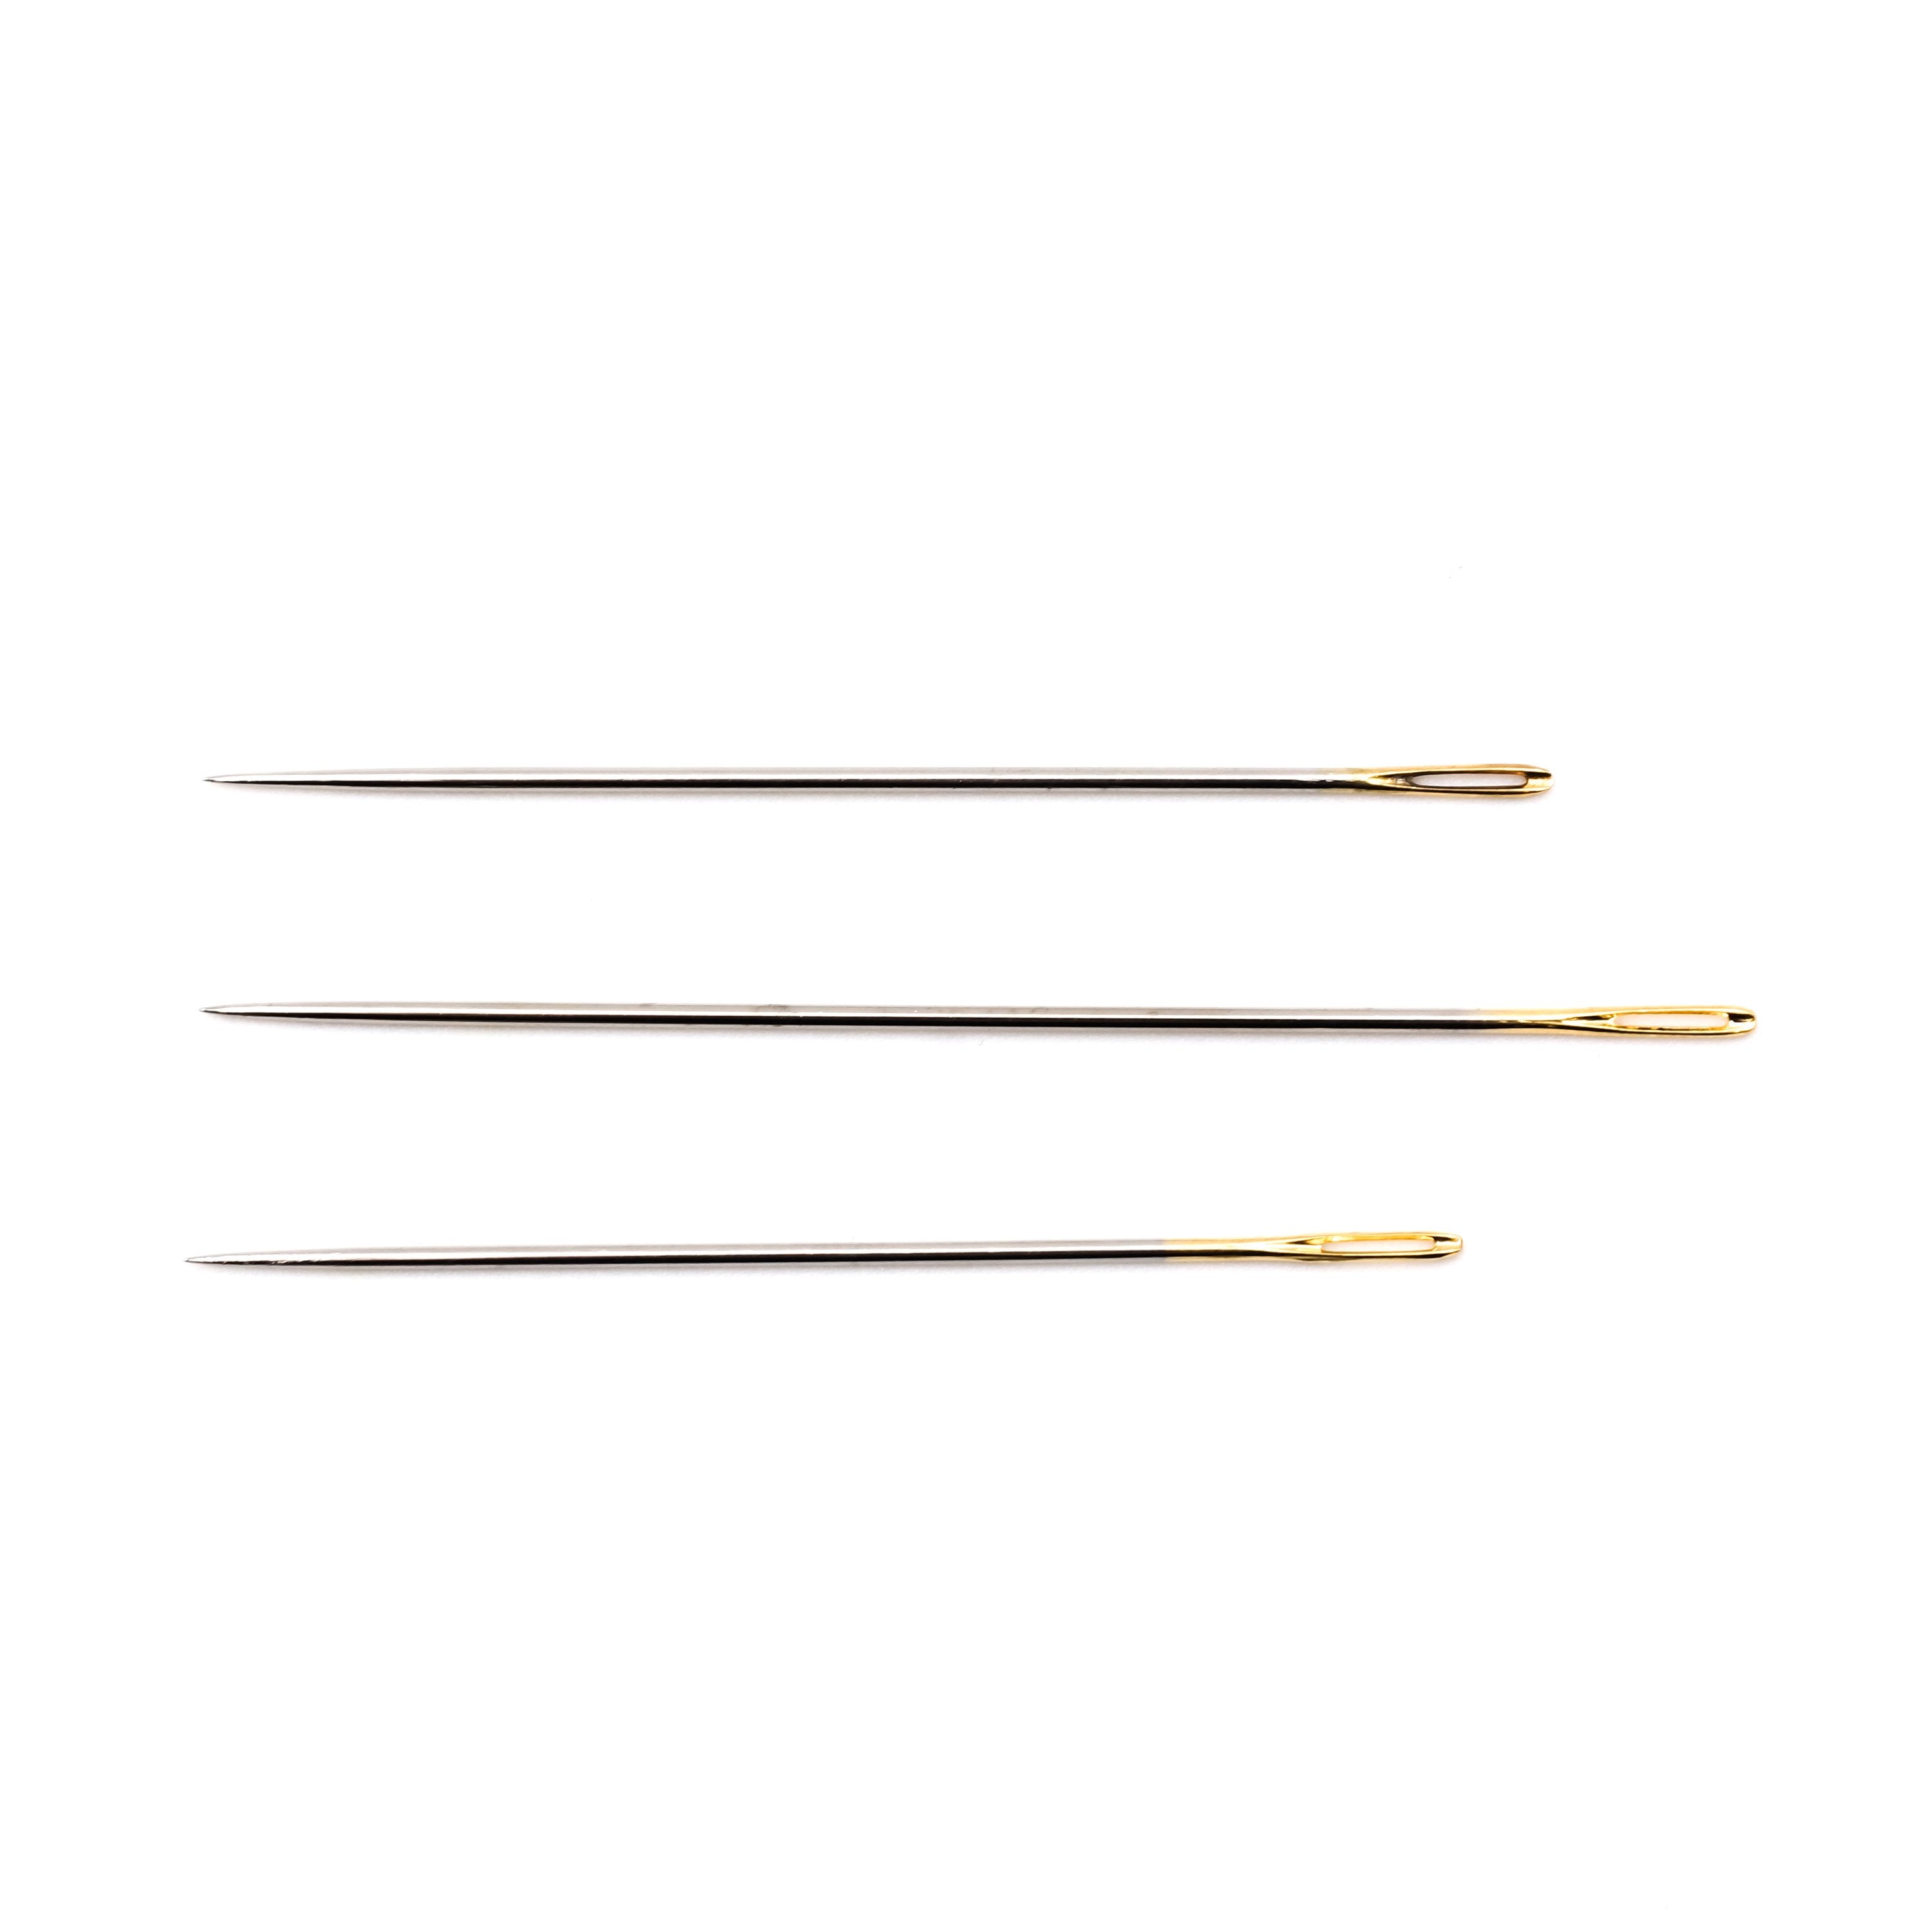 CLV - Sashiko Needles - 0